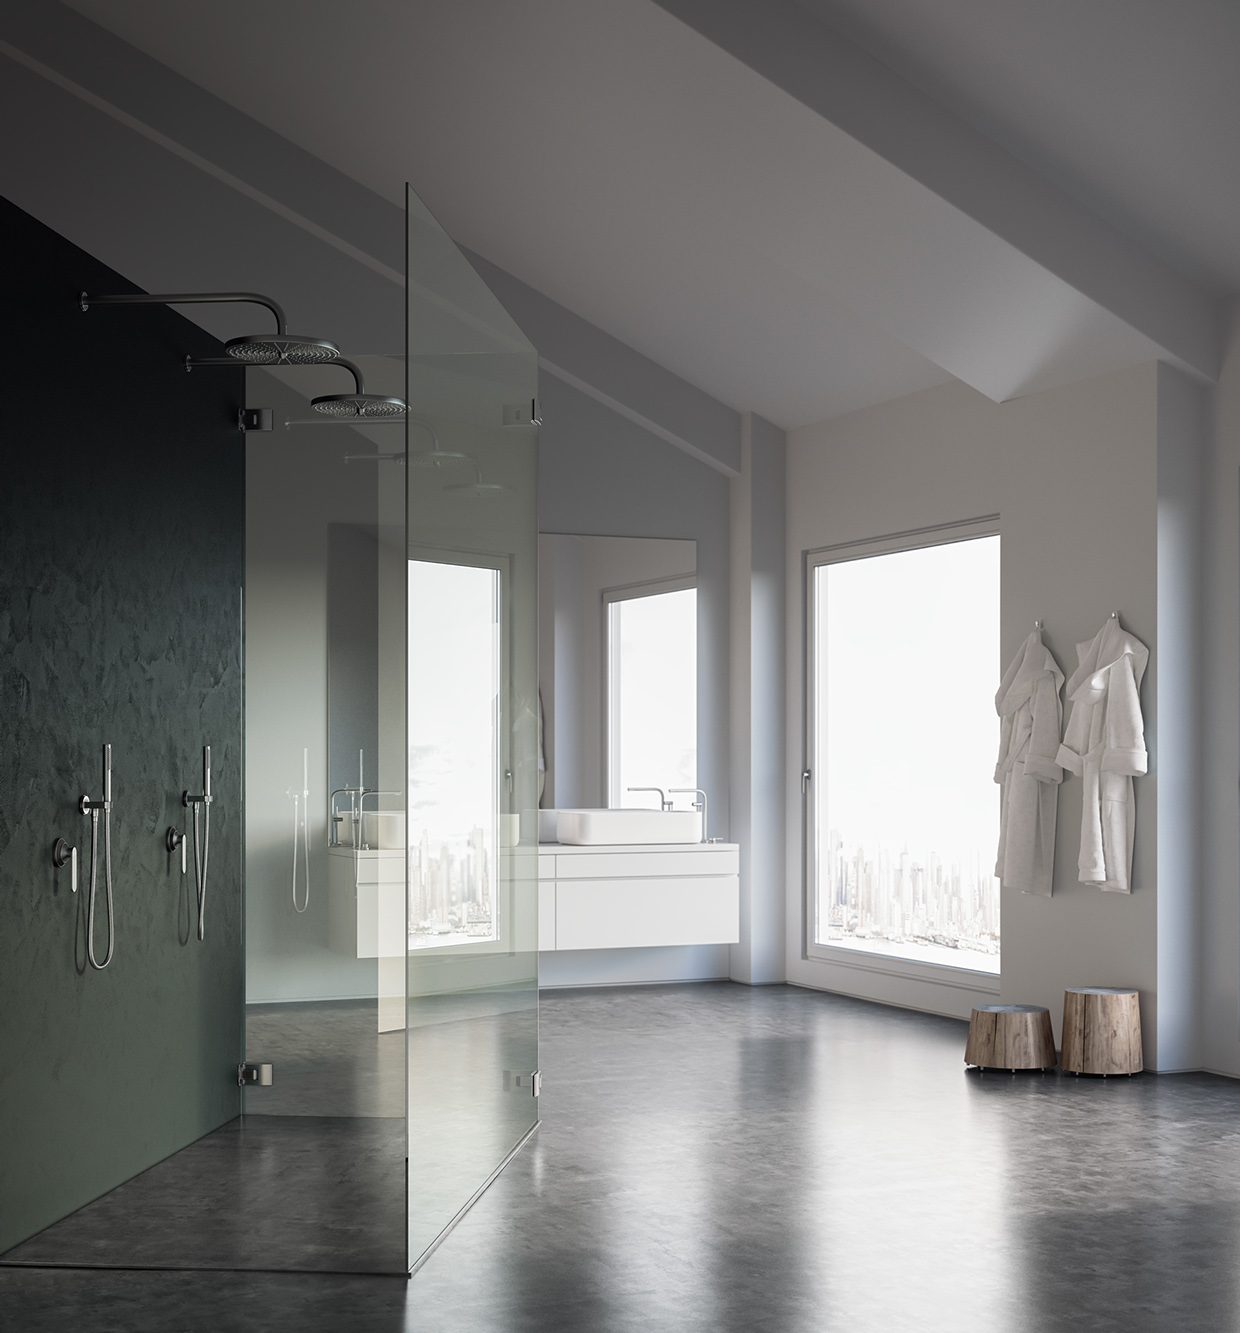 3D Contempory Modern Bathroom Interior Architectural Illustration